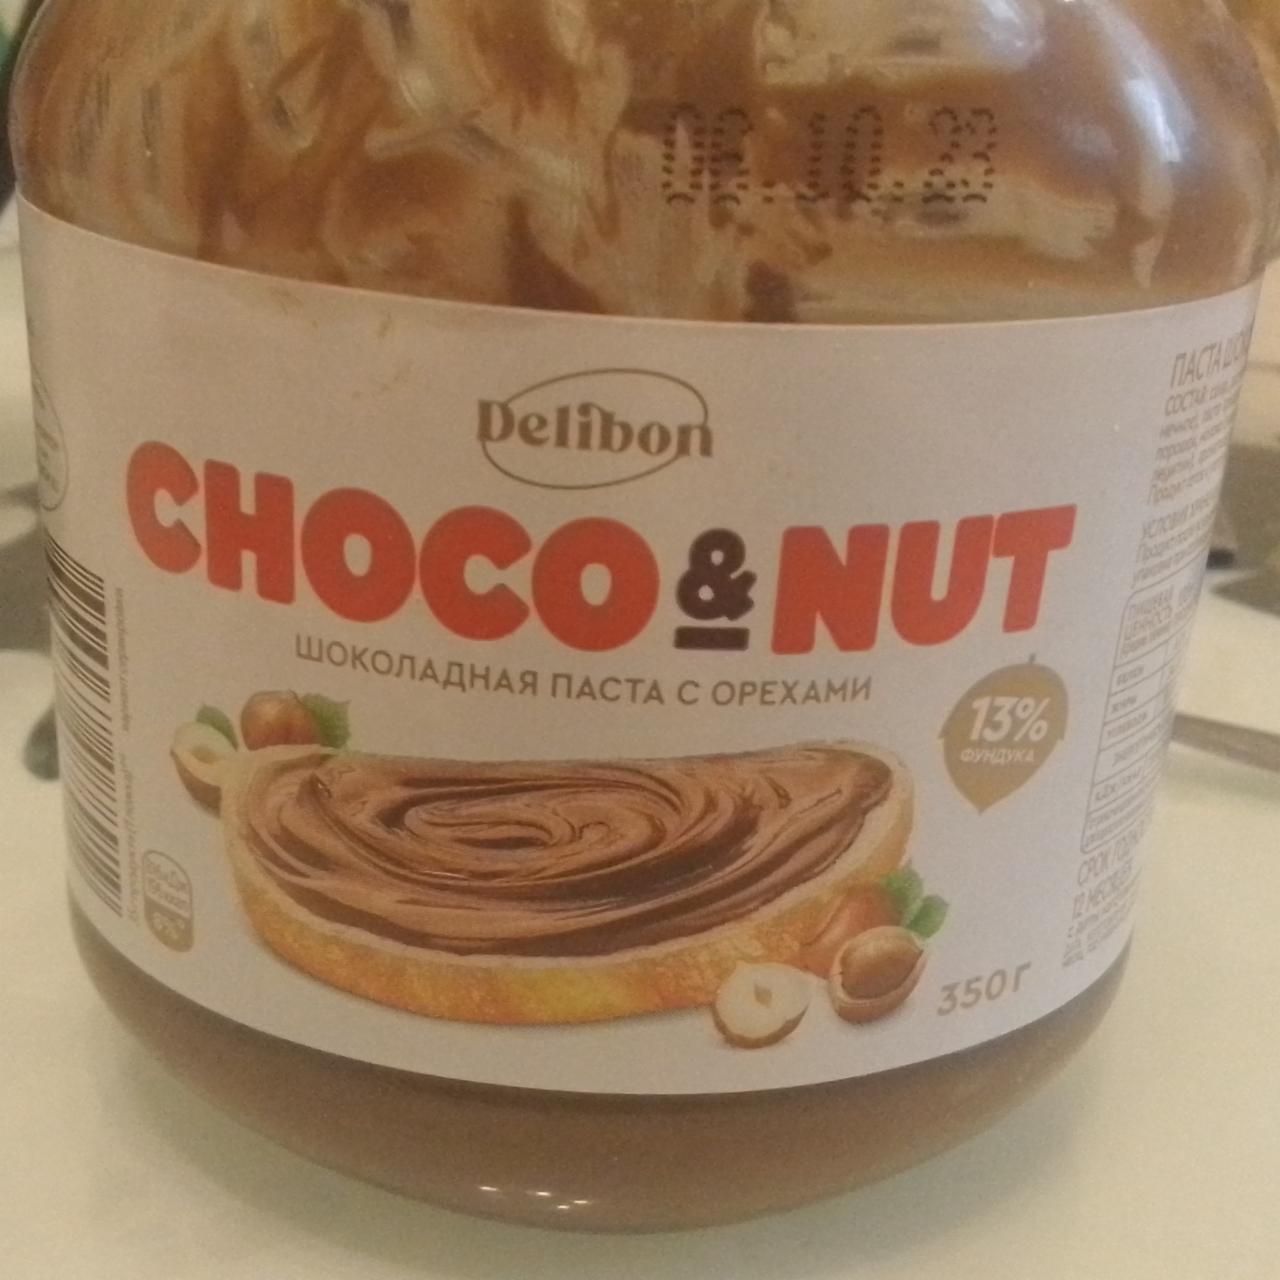 Фото - Шоколадная паста с орехами Choco&nut Delibon